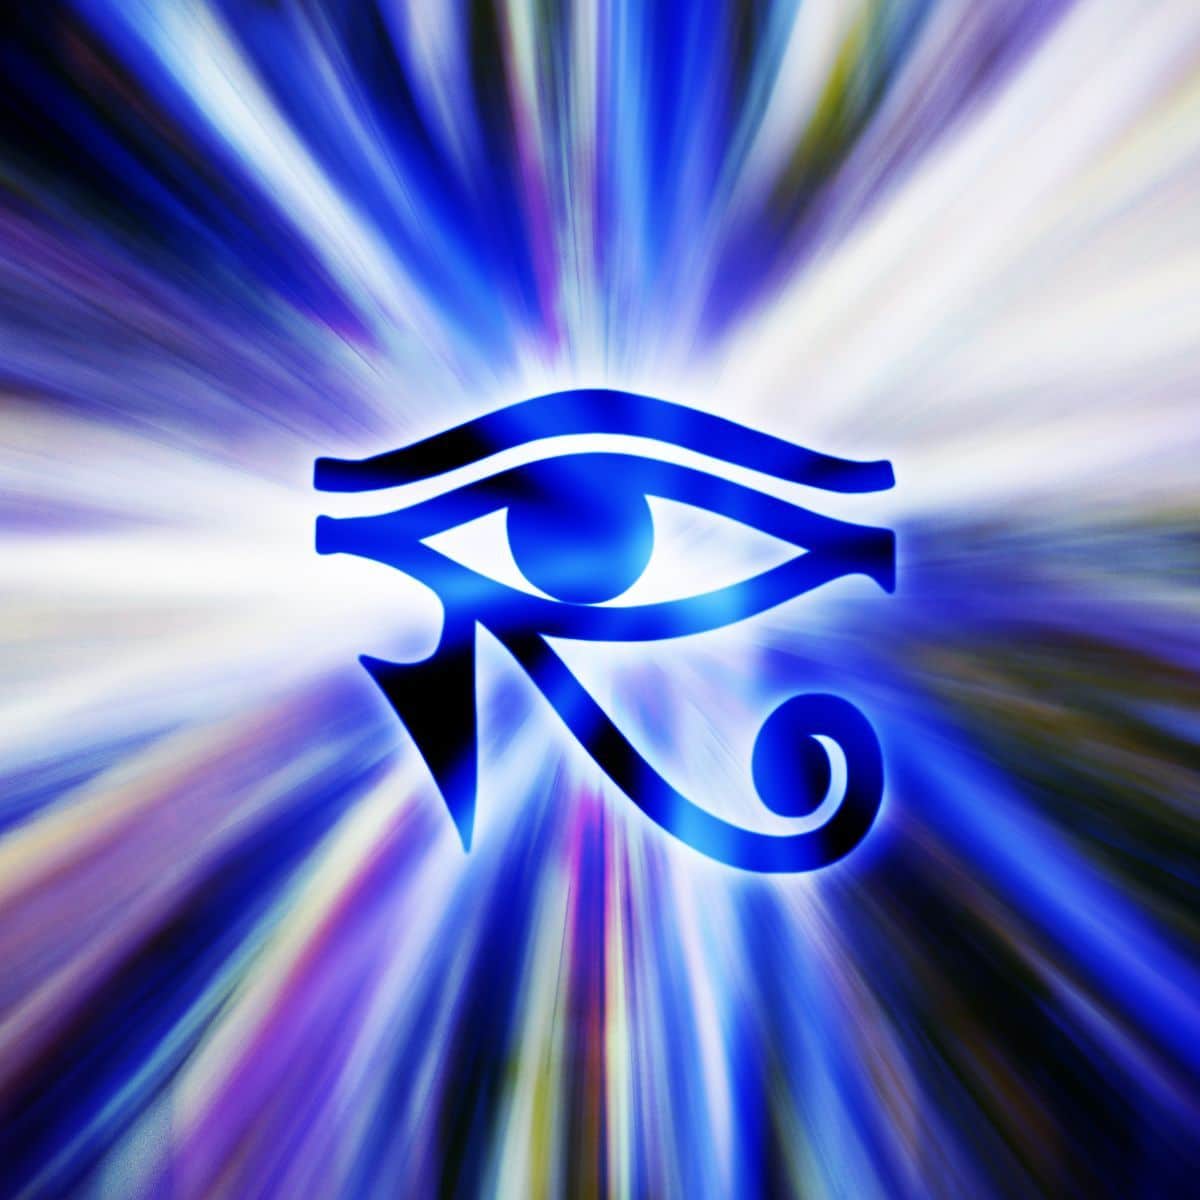 horus spiritual meaning and interpretation